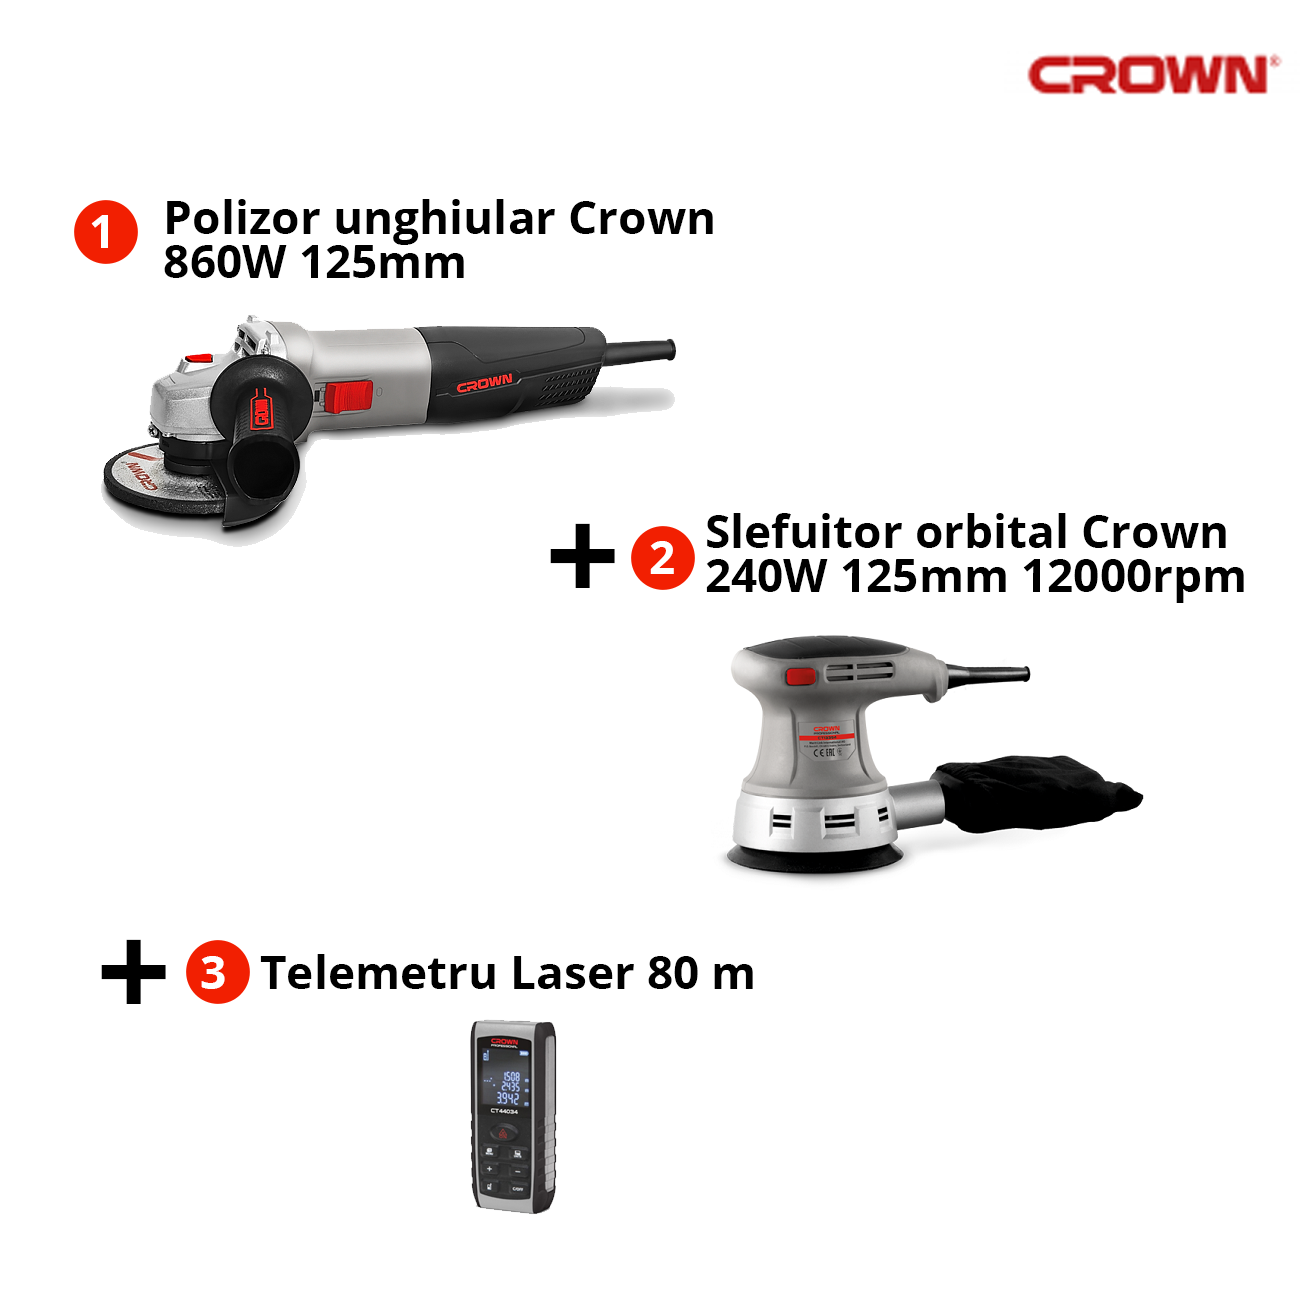 Pachet Crown: Polizor Unghiular CT13497-125R Slefuitor Orbital CT13394 Si Telemetru Laser CT44034